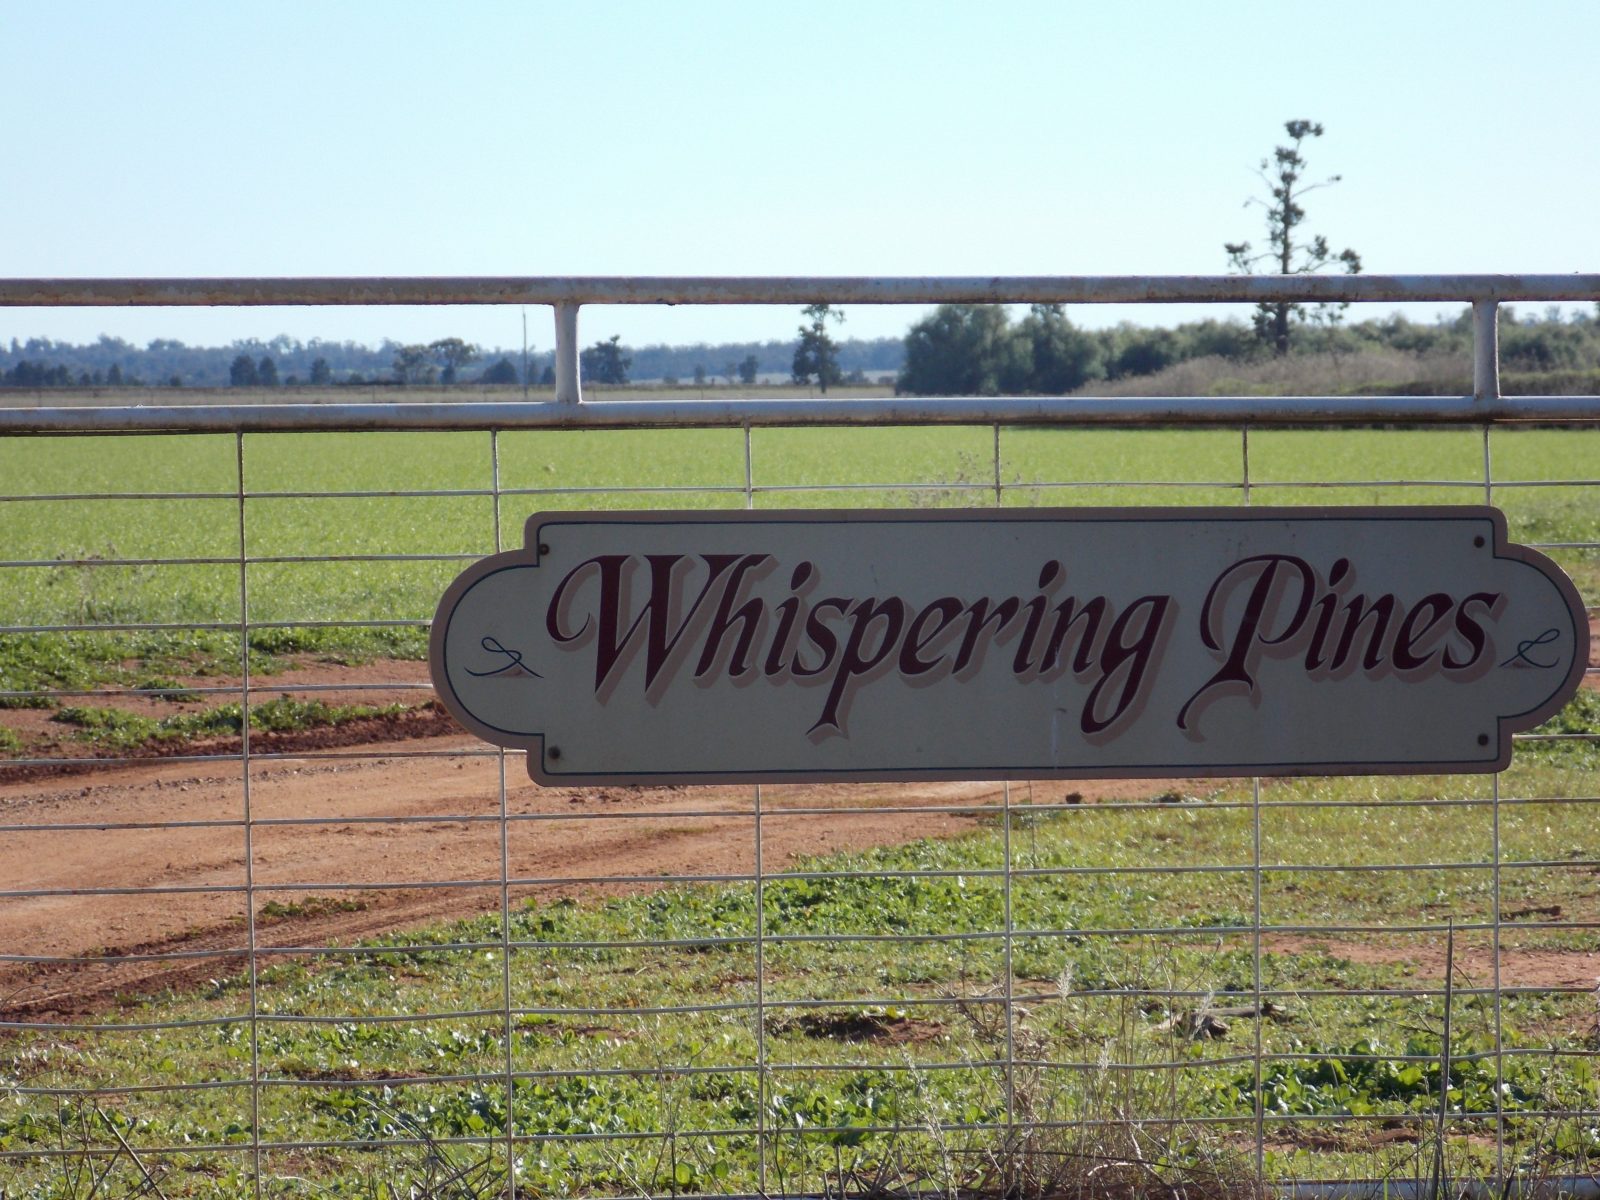 Whispering pines gate